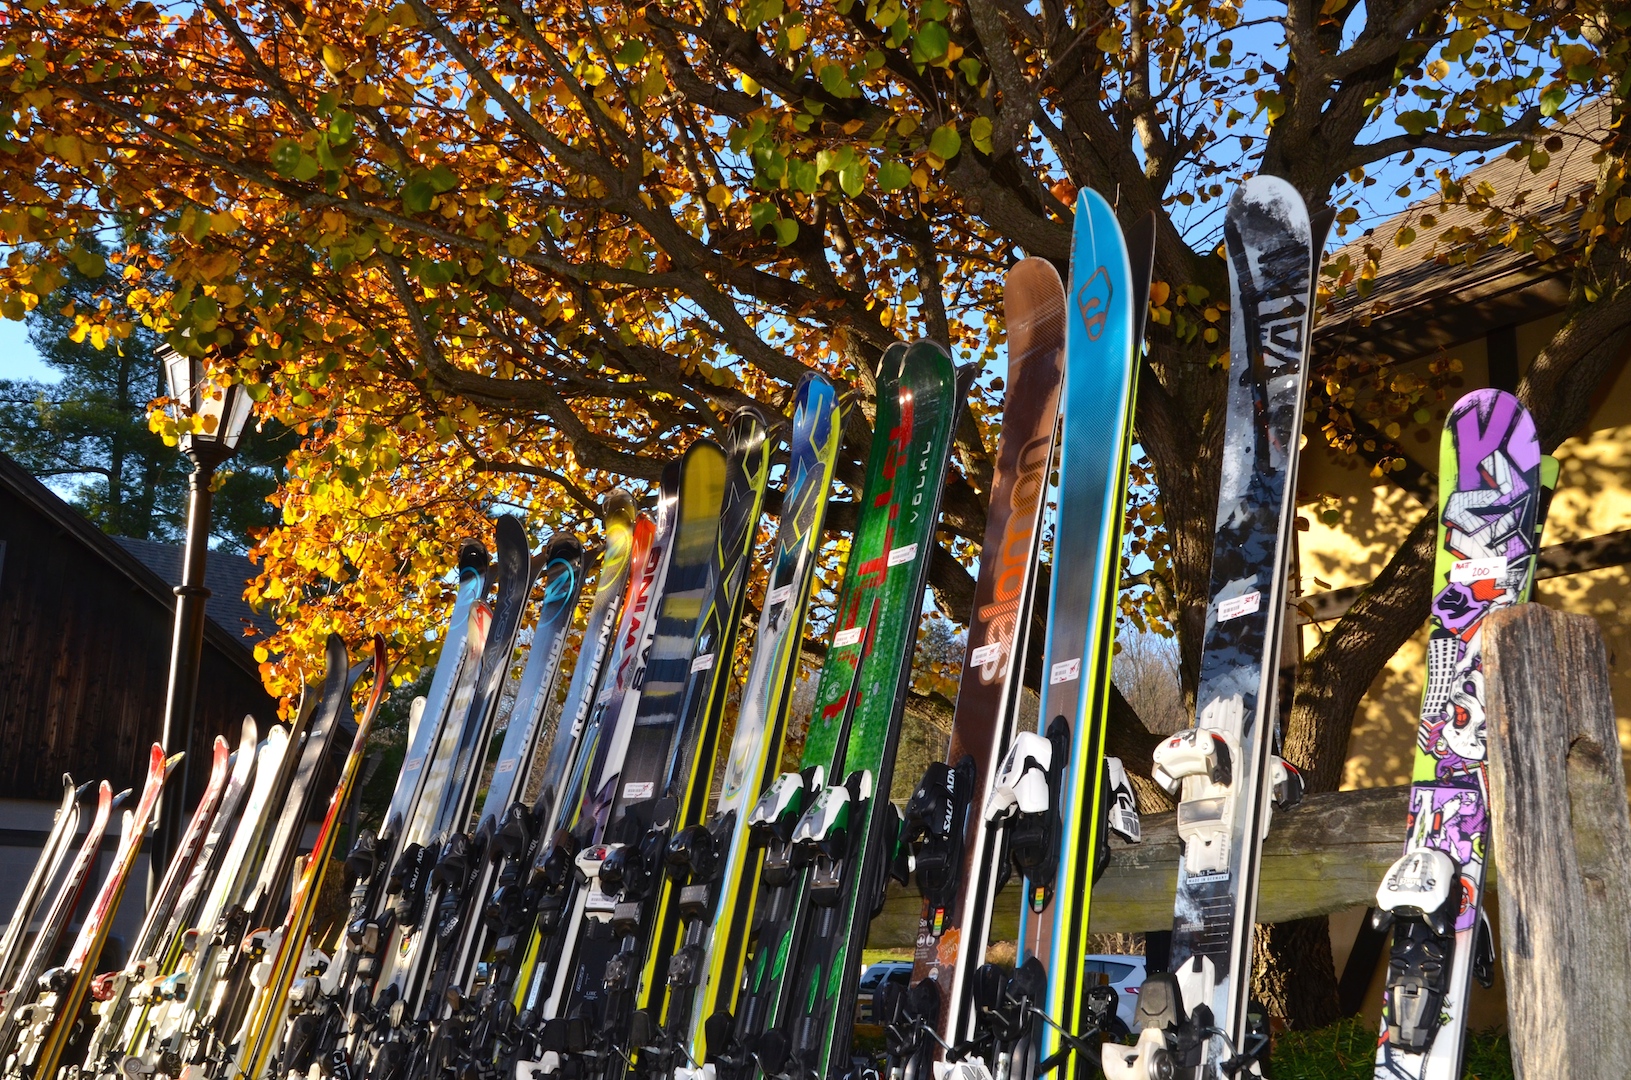 Great Deals on Skis at Snow Trails Ski Patrol Swap Weekend